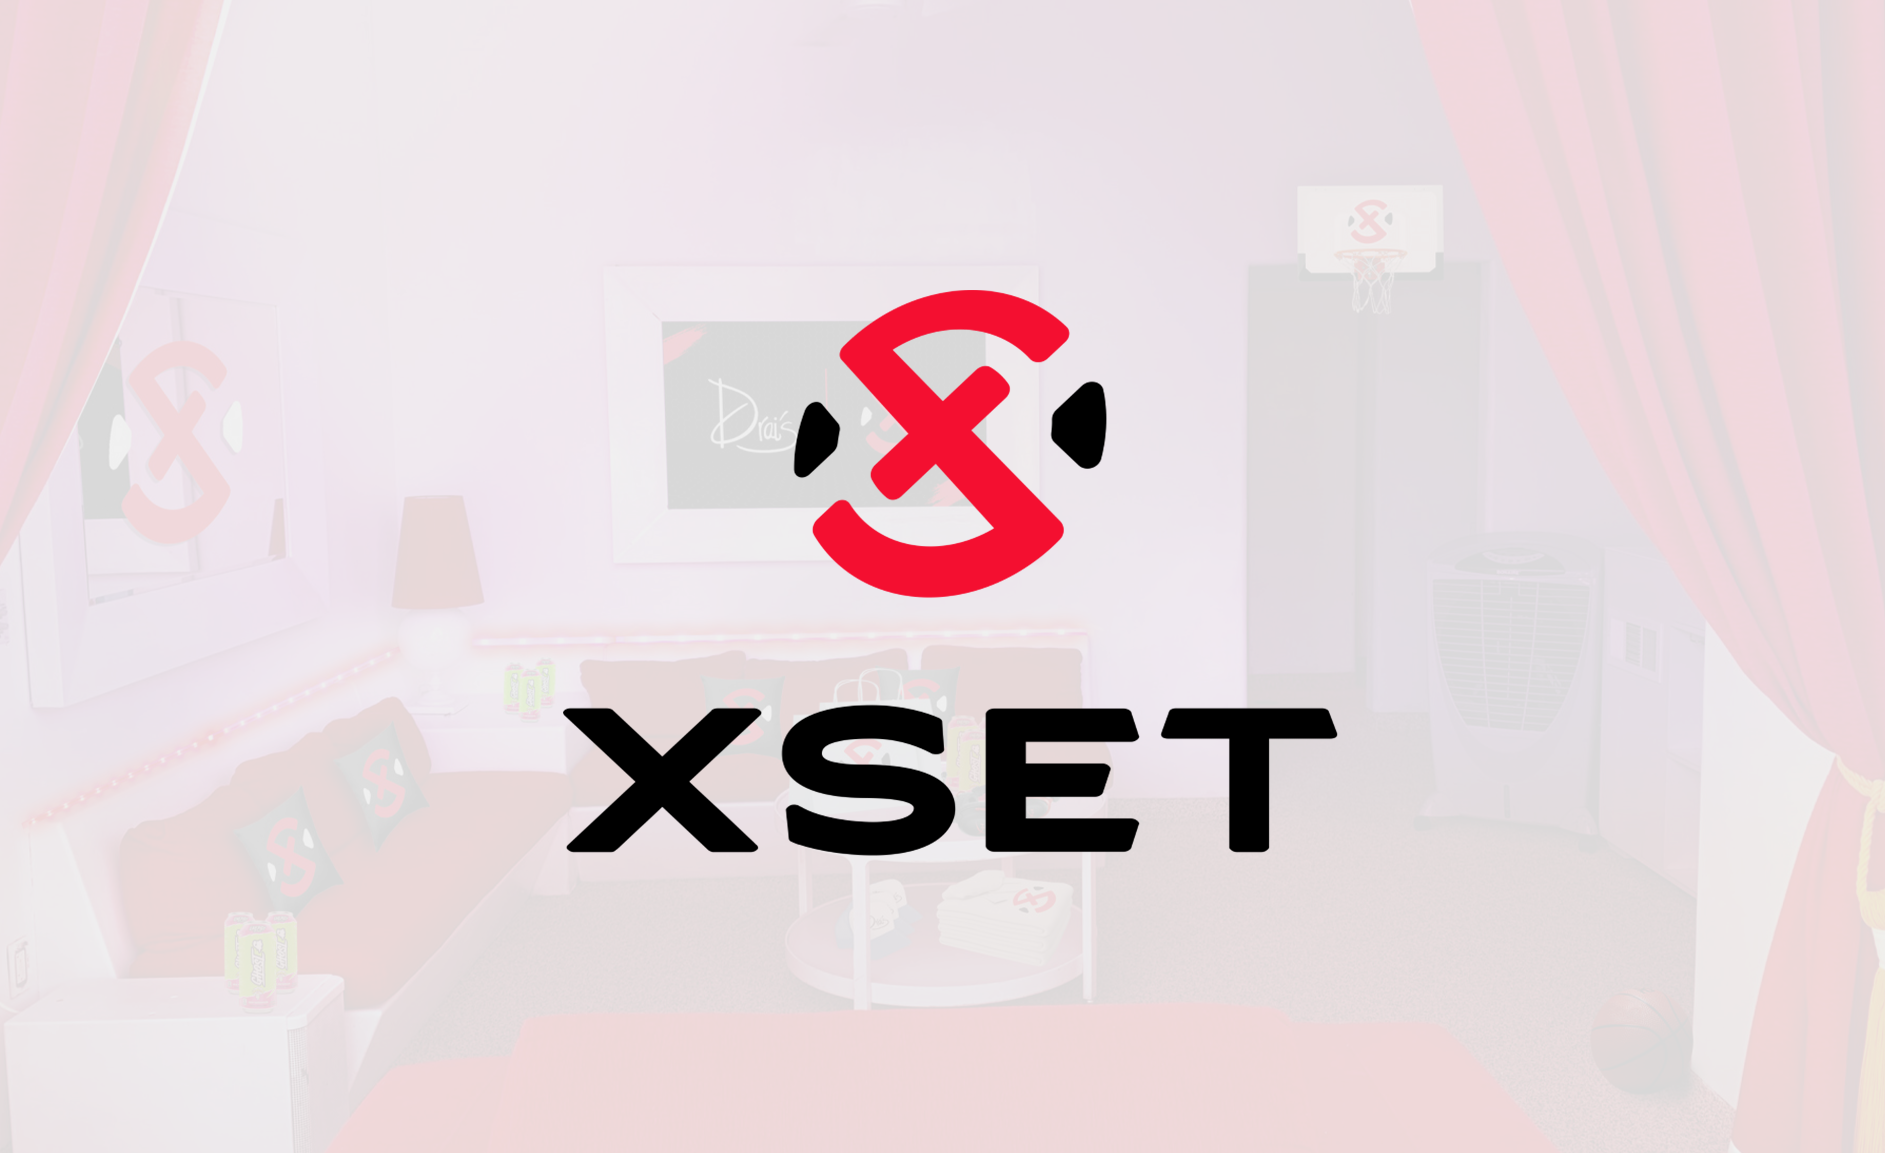 XSET Secures Early Lead With Bonus Round Retake